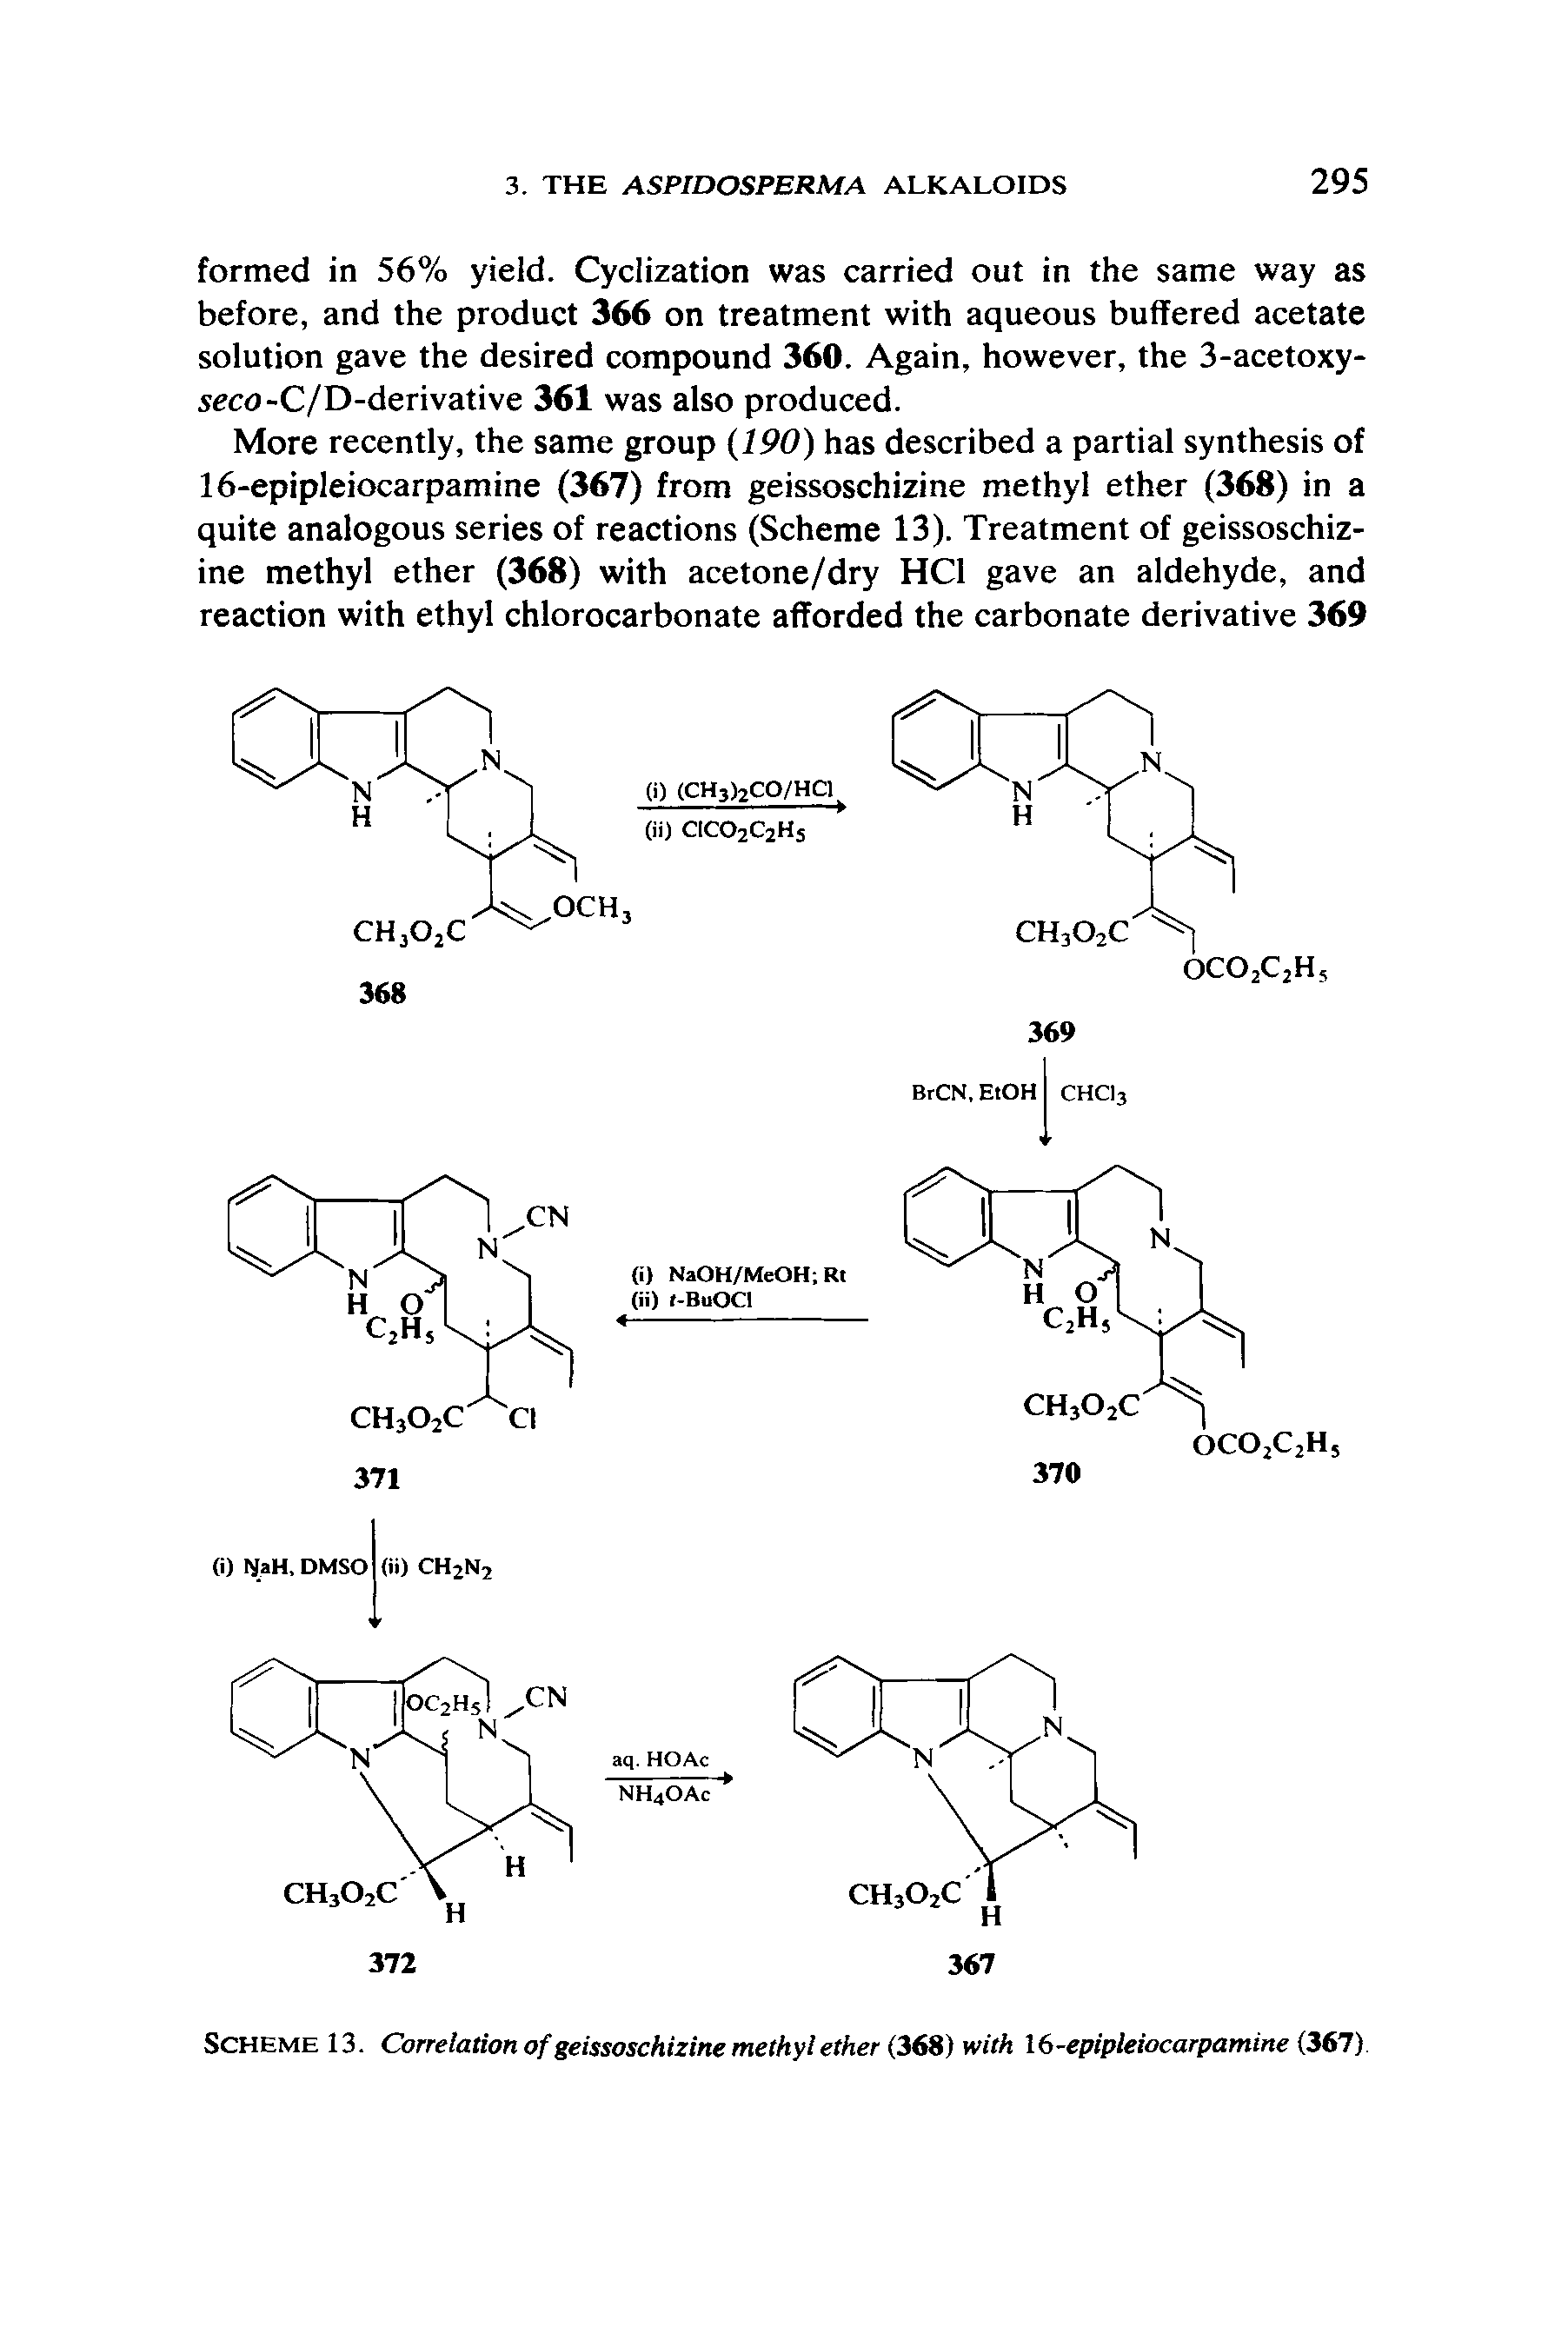 Scheme 13. Correlation of geissoschizine methyl ether (368) with 16-epipleiocarpamine (367).